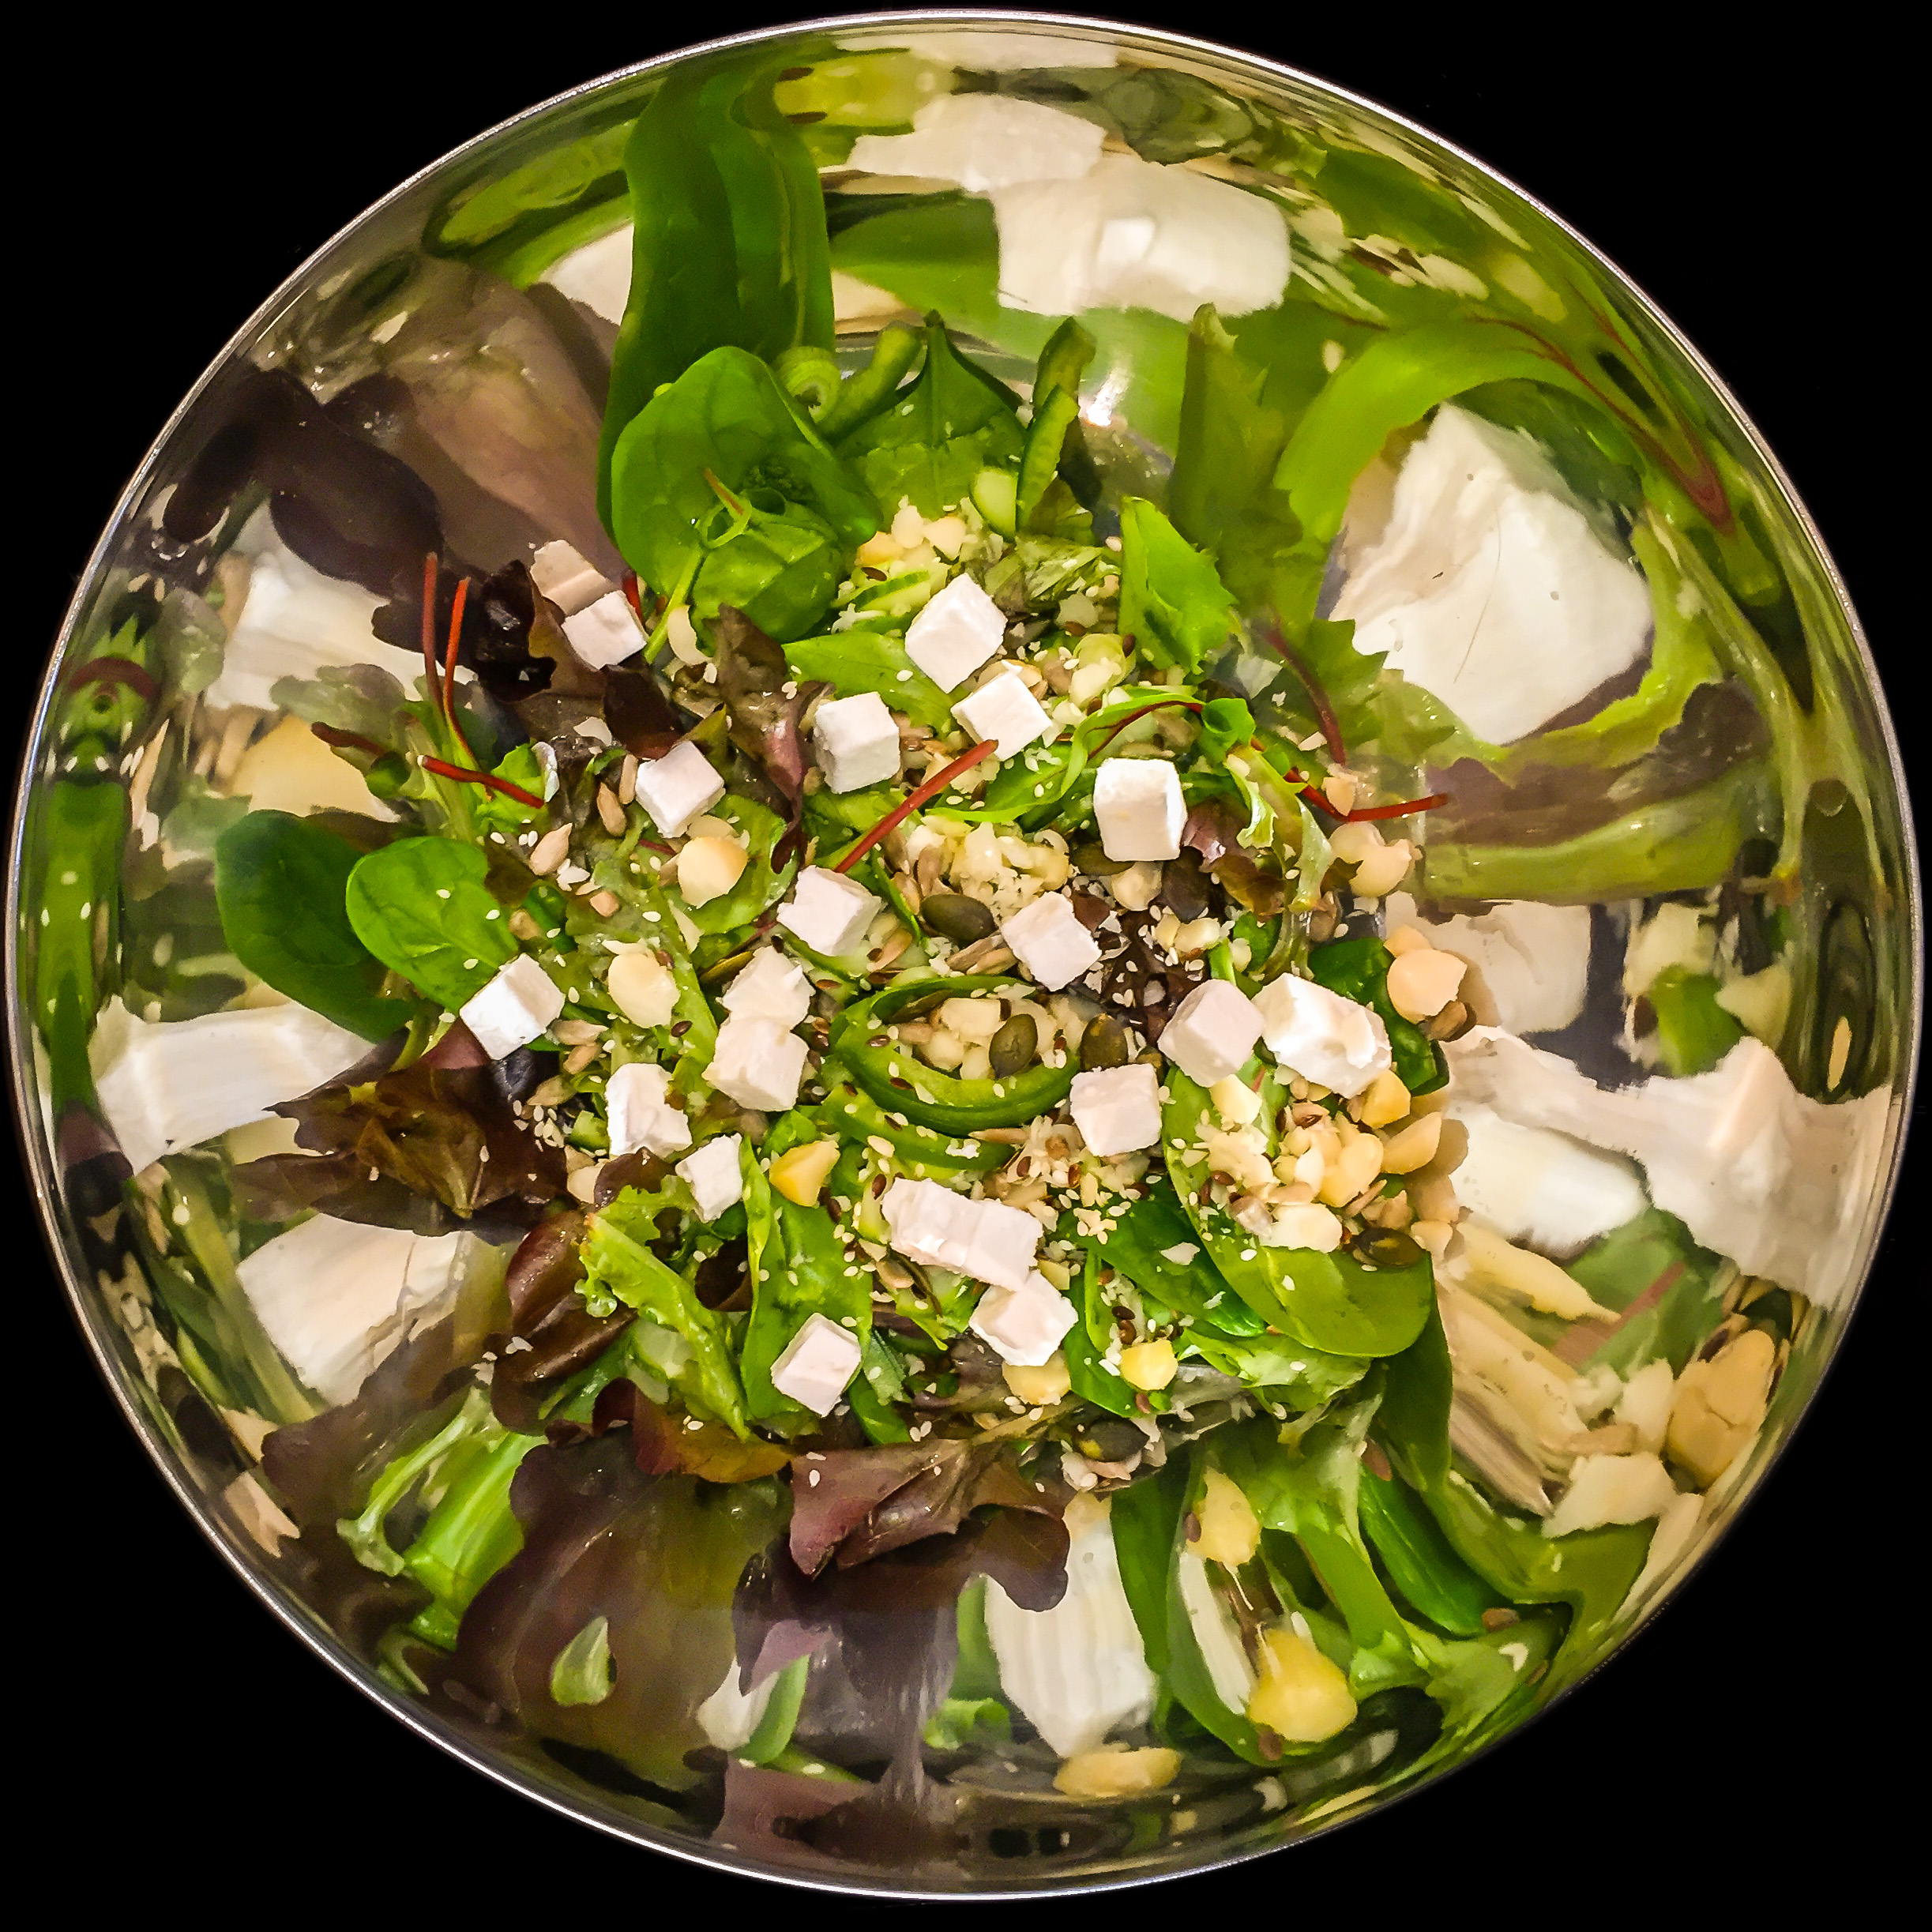 Day 43.2 – Parabolic salad bowl